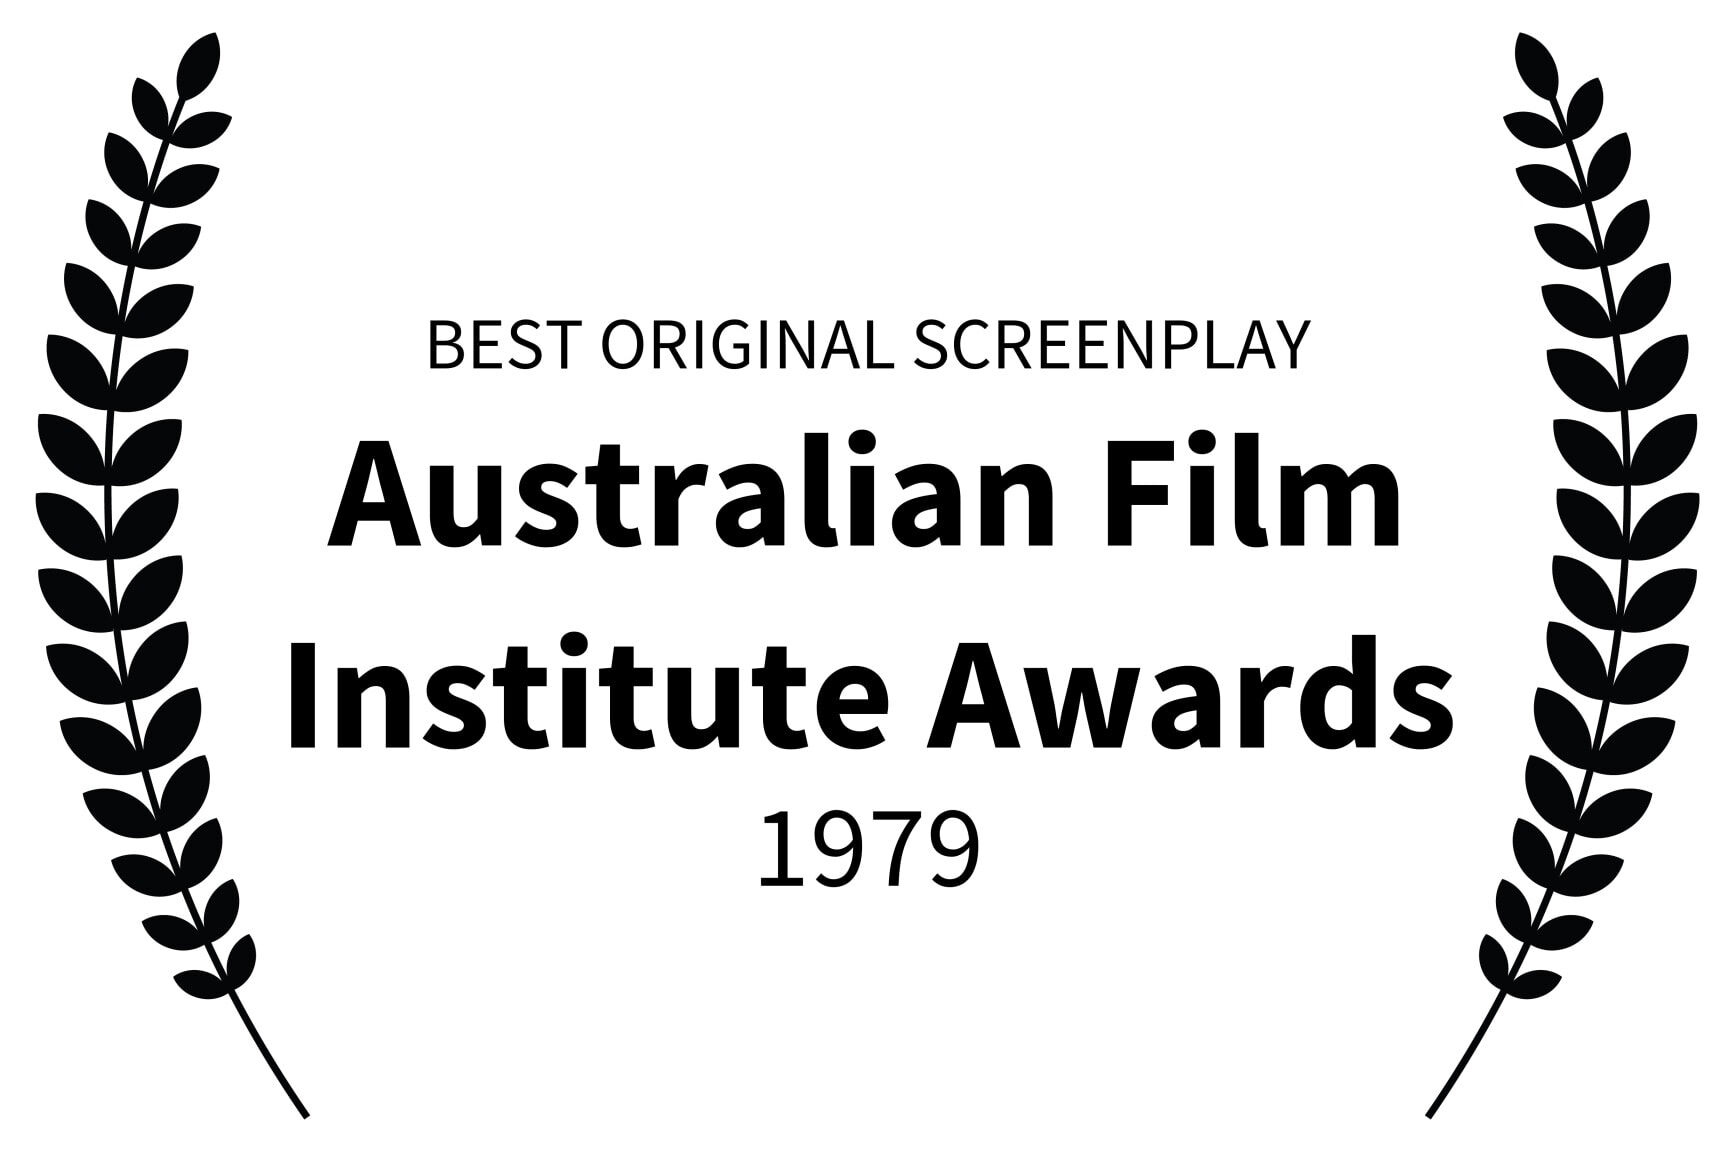 BEST ORIGINAL SCREENPLAY - Australian Film Institute Awards - 1979